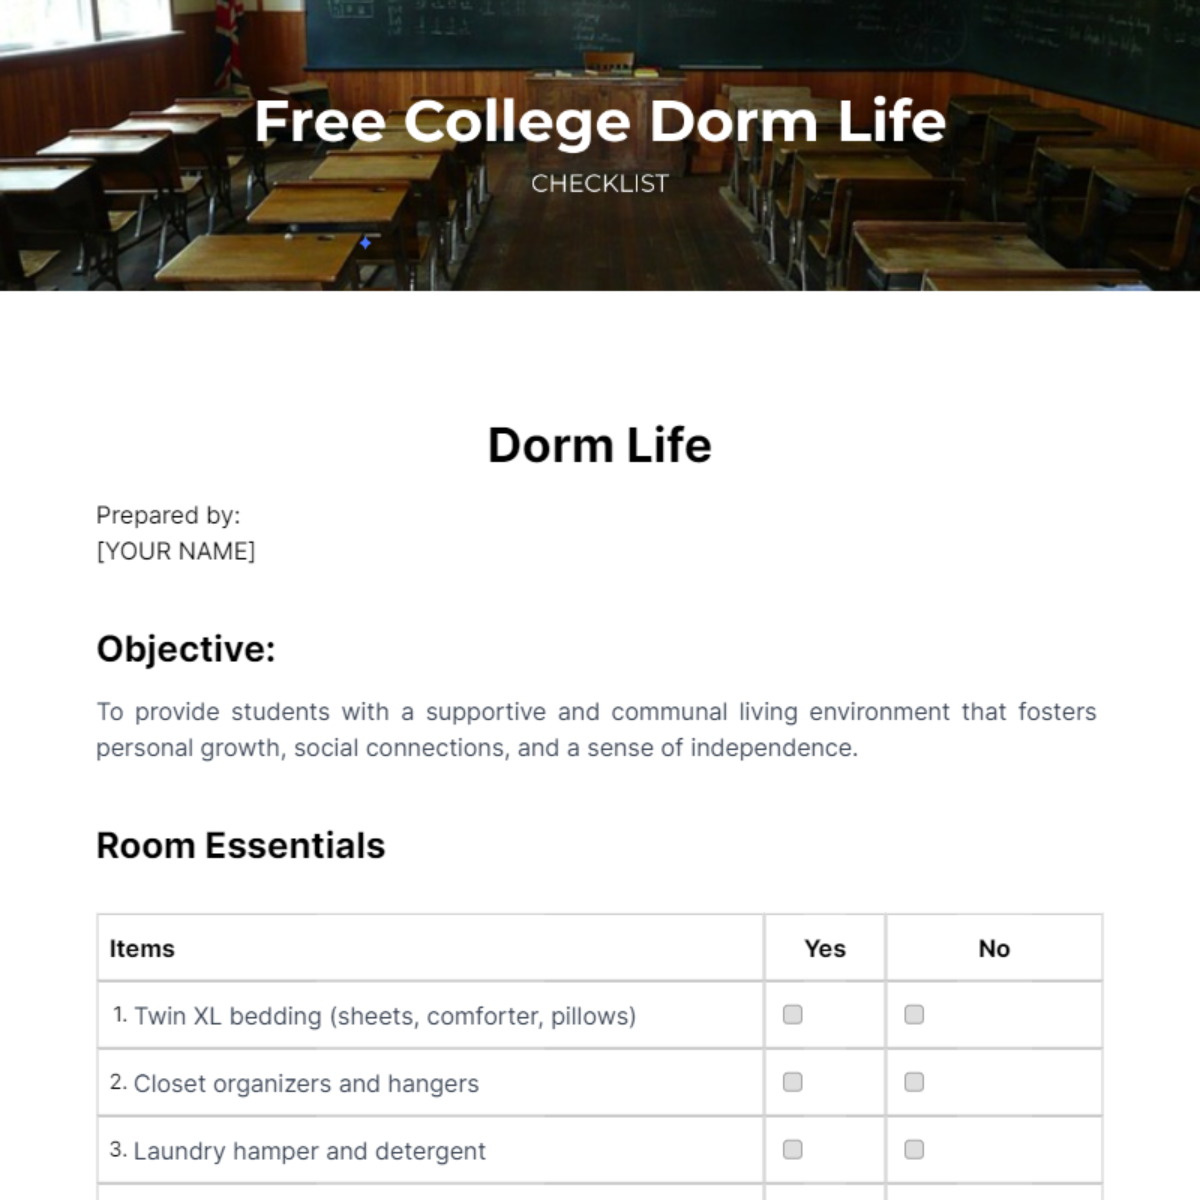 Free College Dorm Life Checklist Template